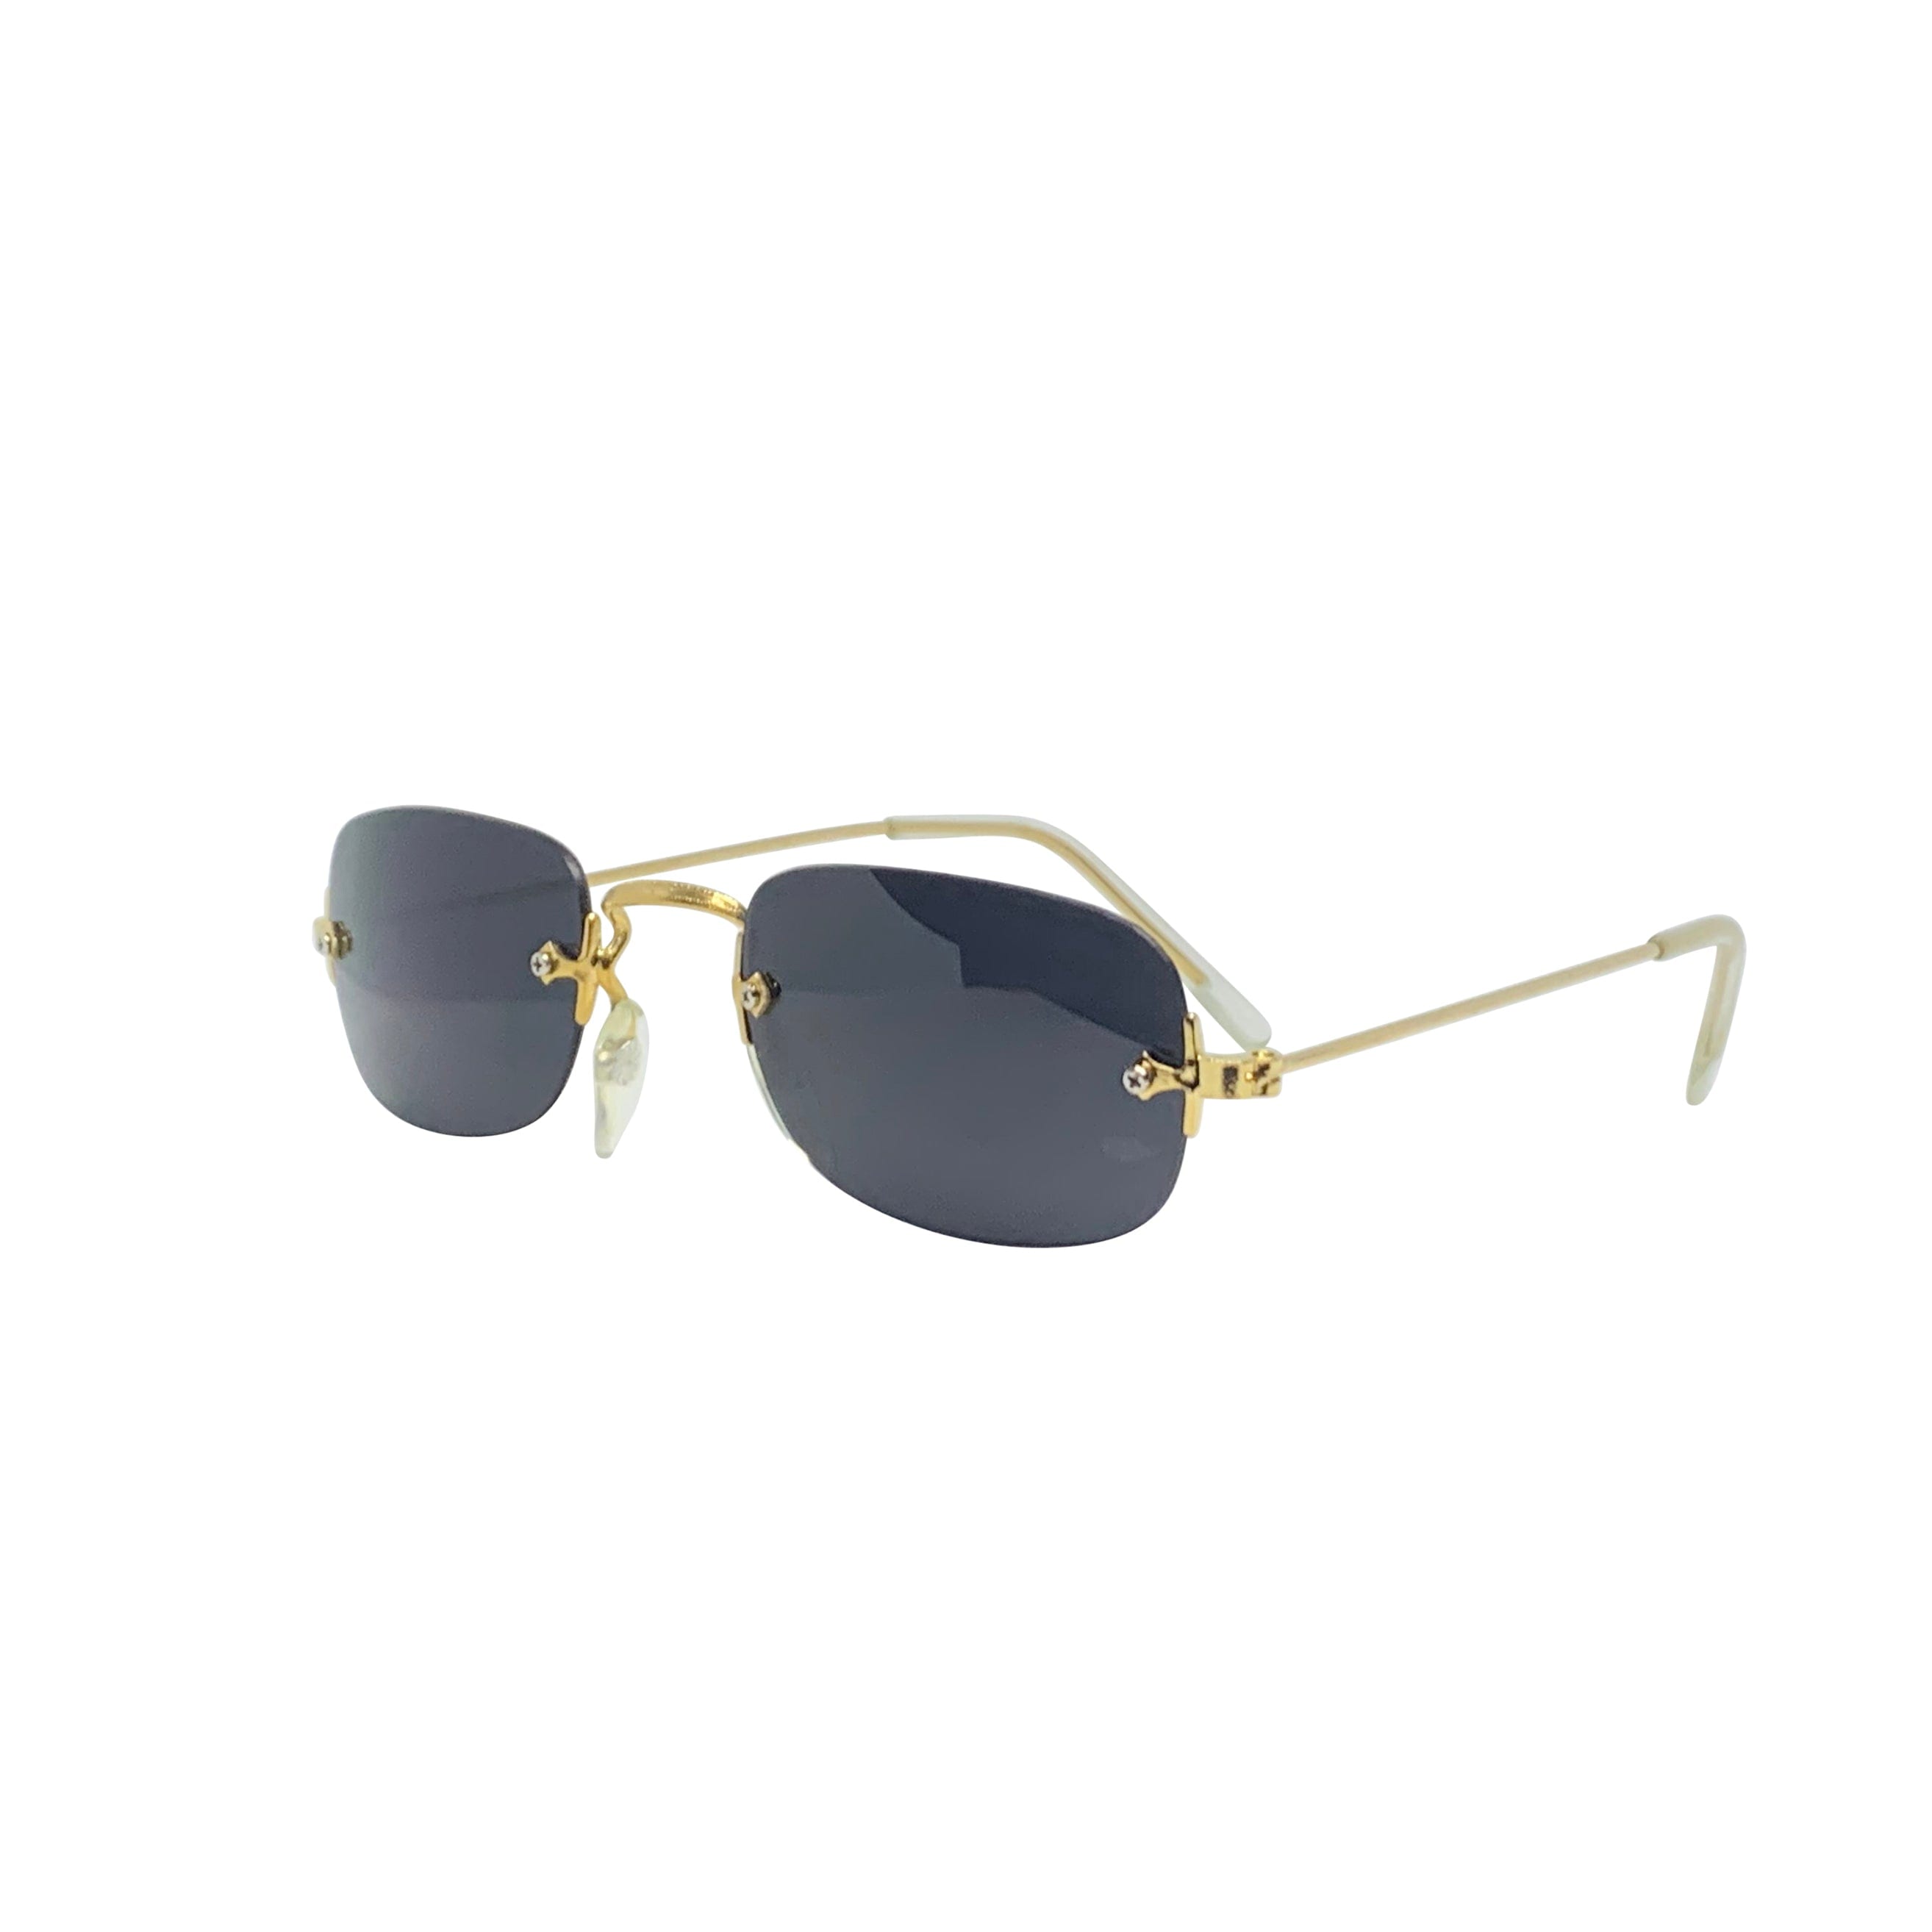 SOUP Rimless 90s Gold/Super Dark Sunglasses